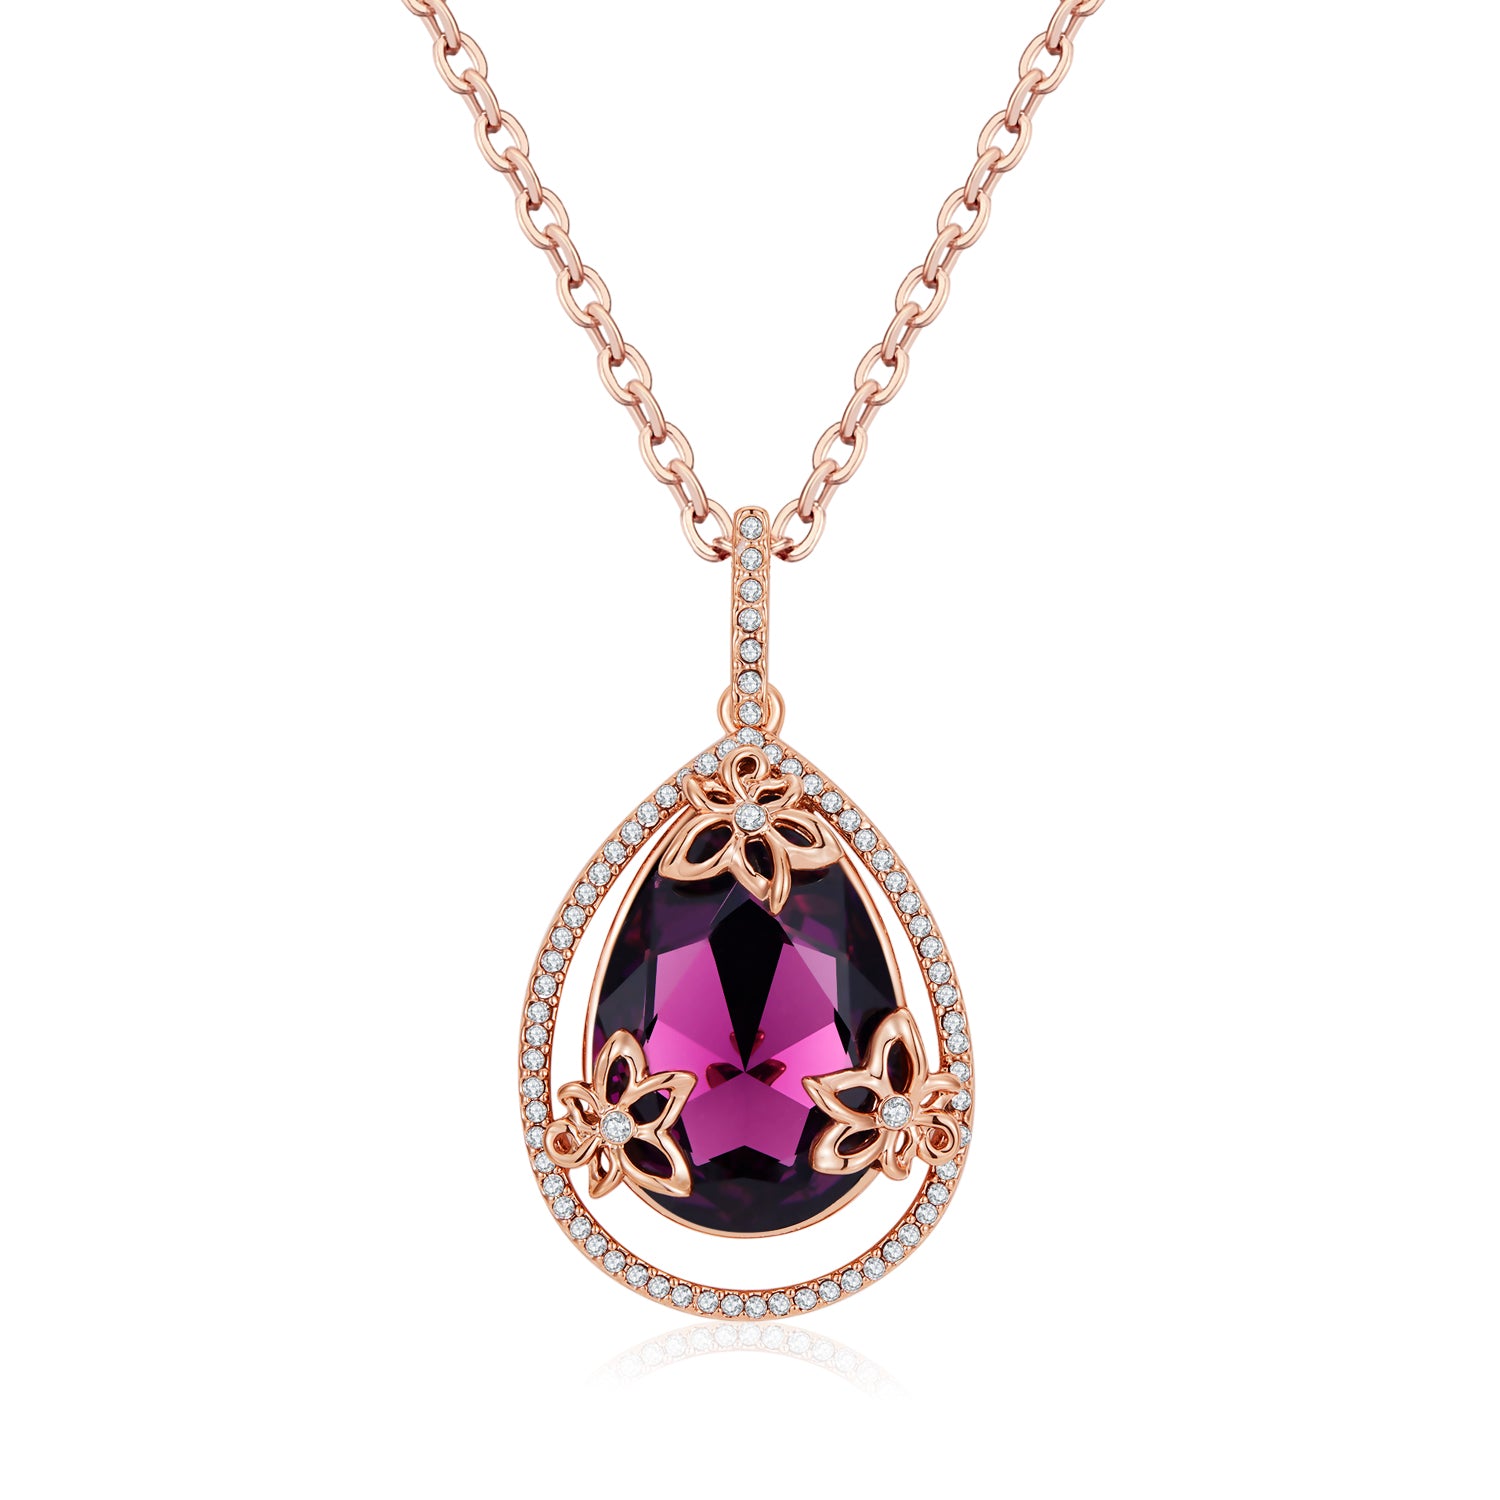 Unique Vikazzi Mermaid Tears Pendant Necklace with Swarovski Crystals